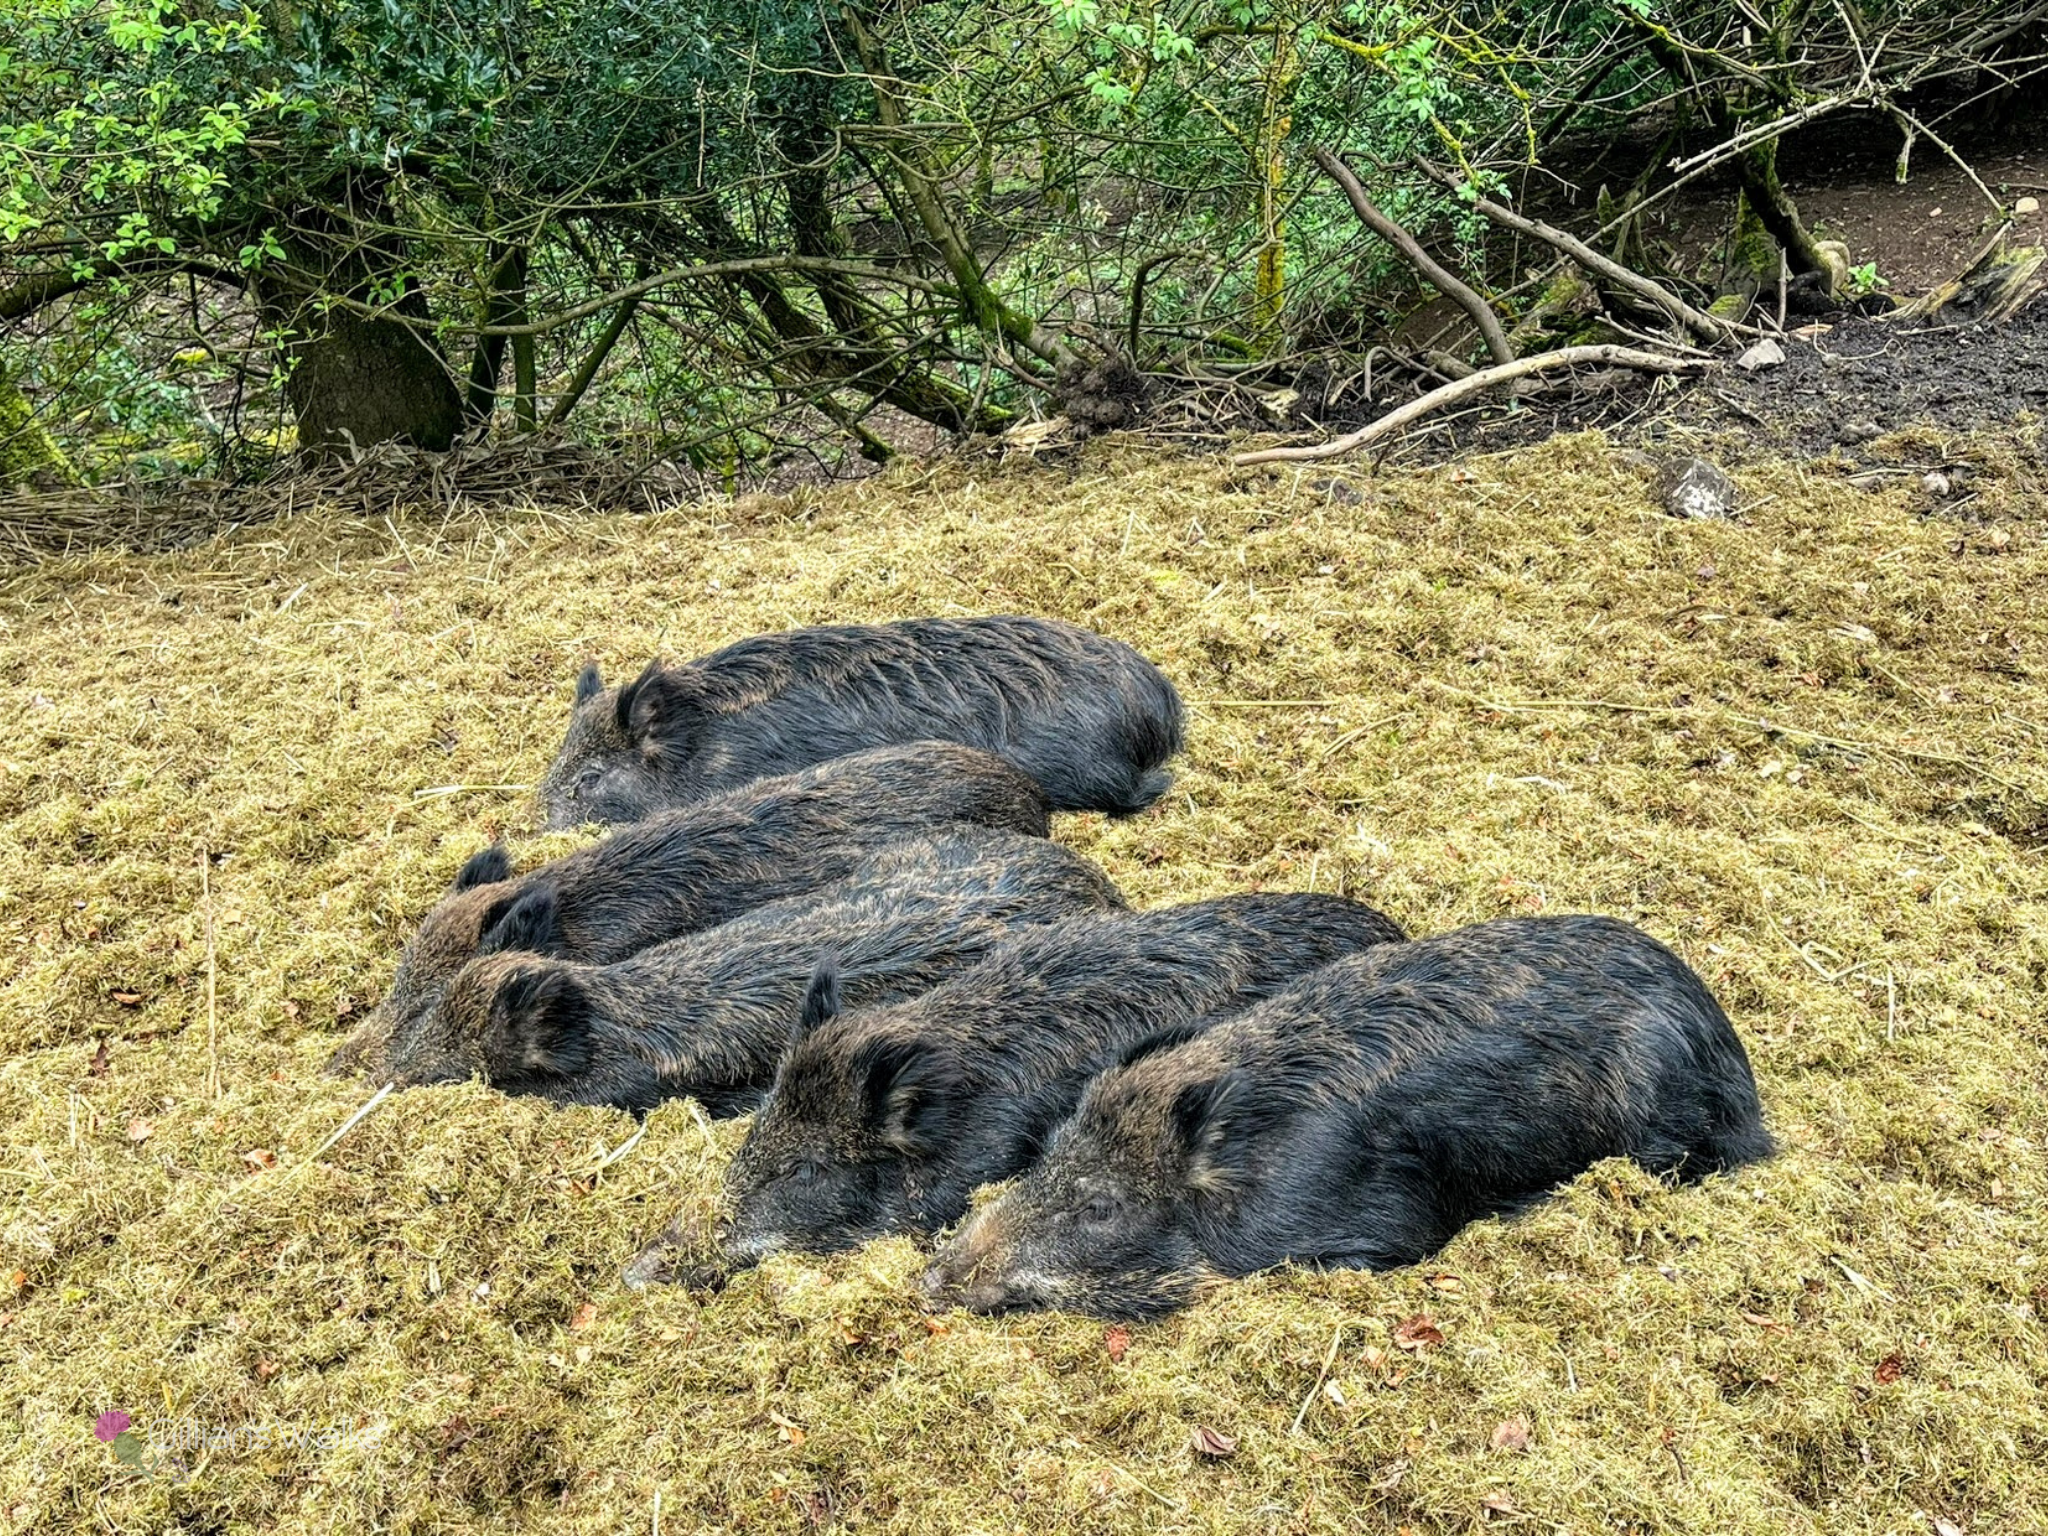 Five boar lying huddled together side by side on some hay